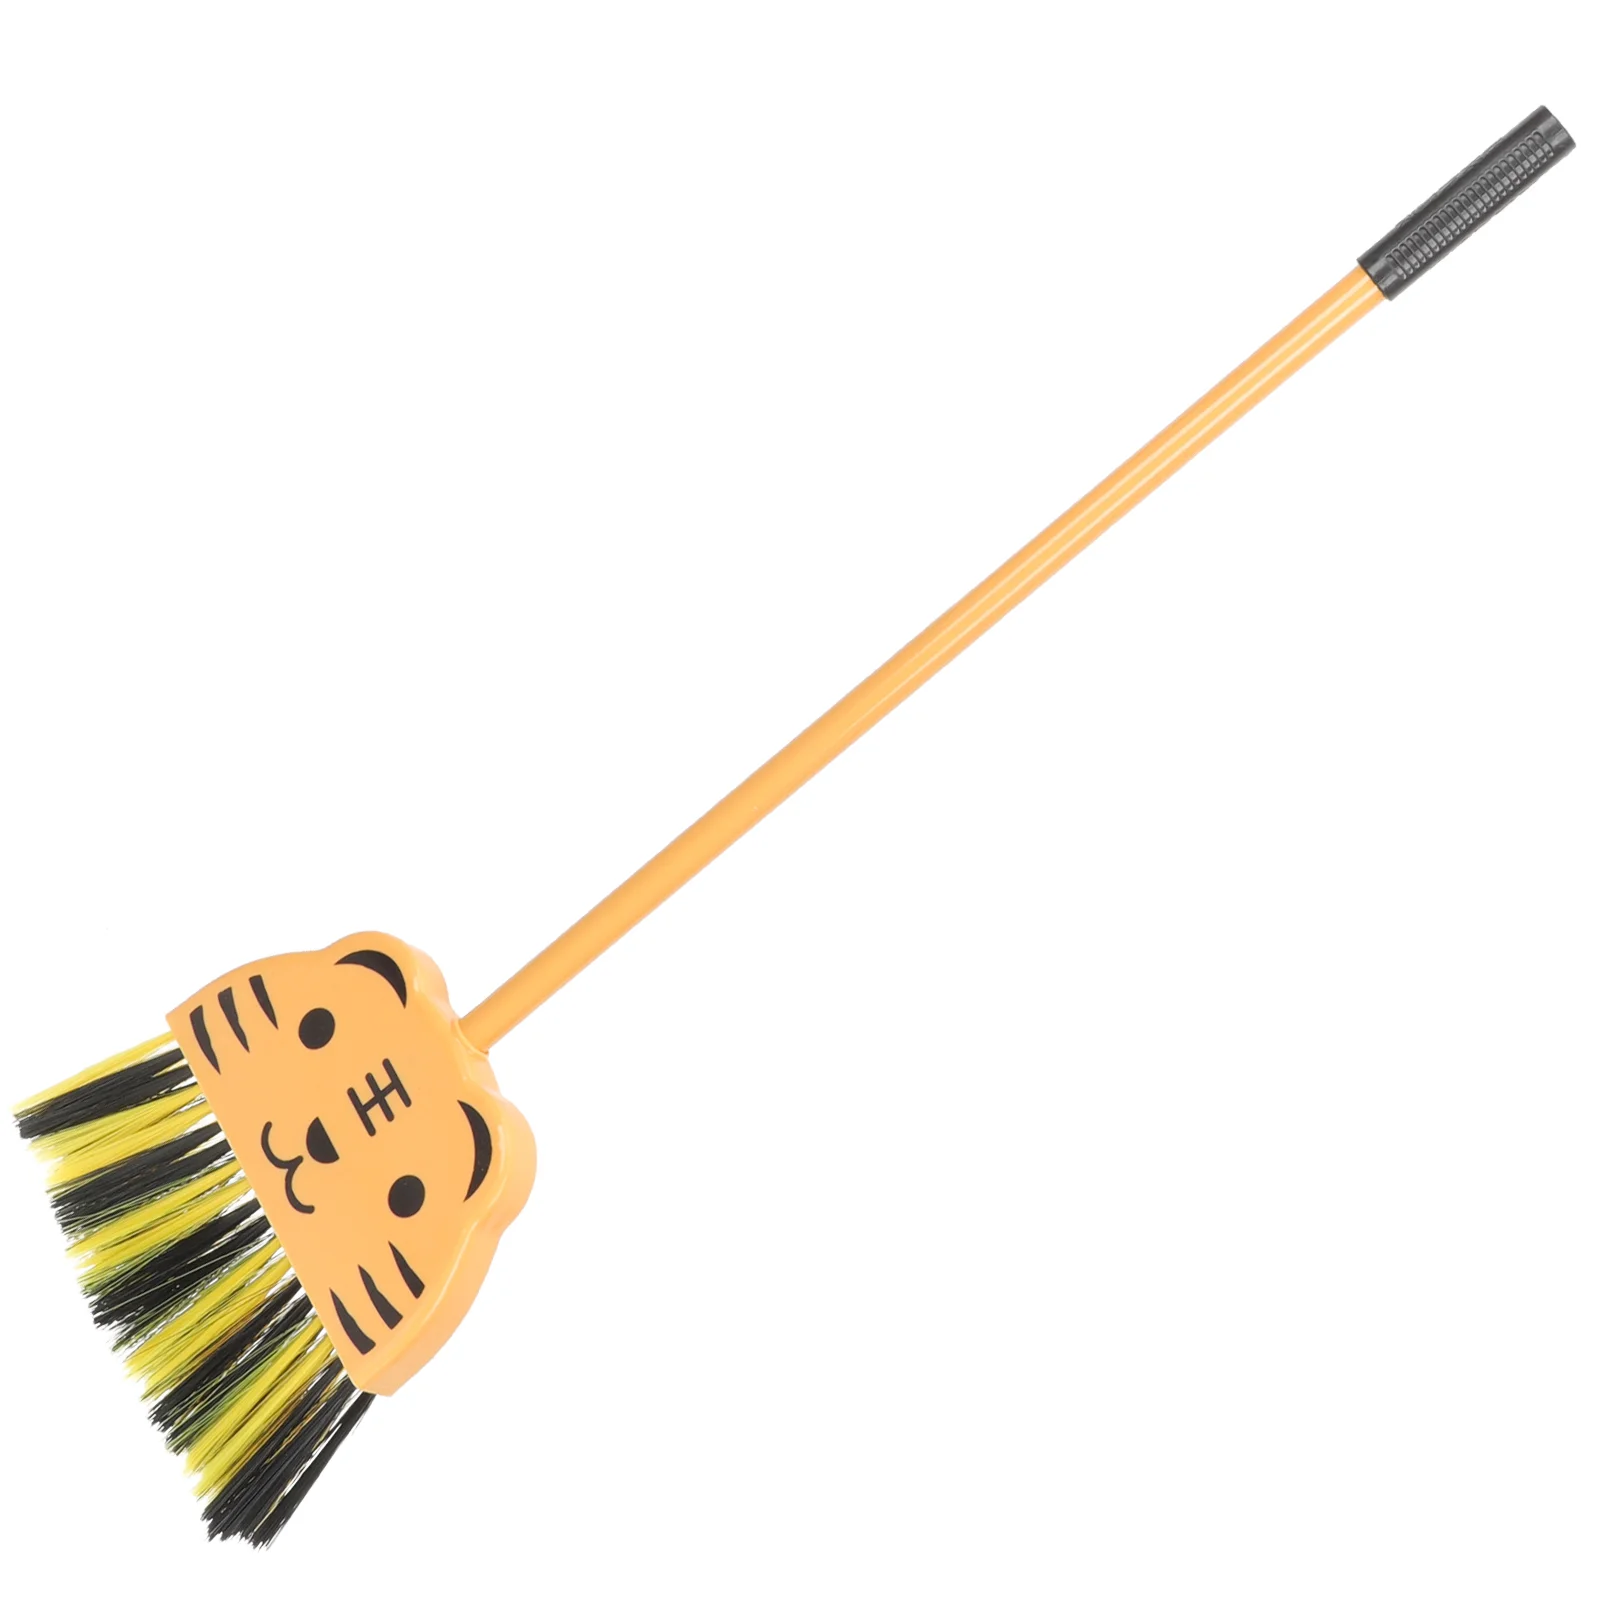 Educational Cleaning Pax Cleaning Kit Pretend Play Supplies Mop Broom Set Educational Broom Kit Mini Dustpan